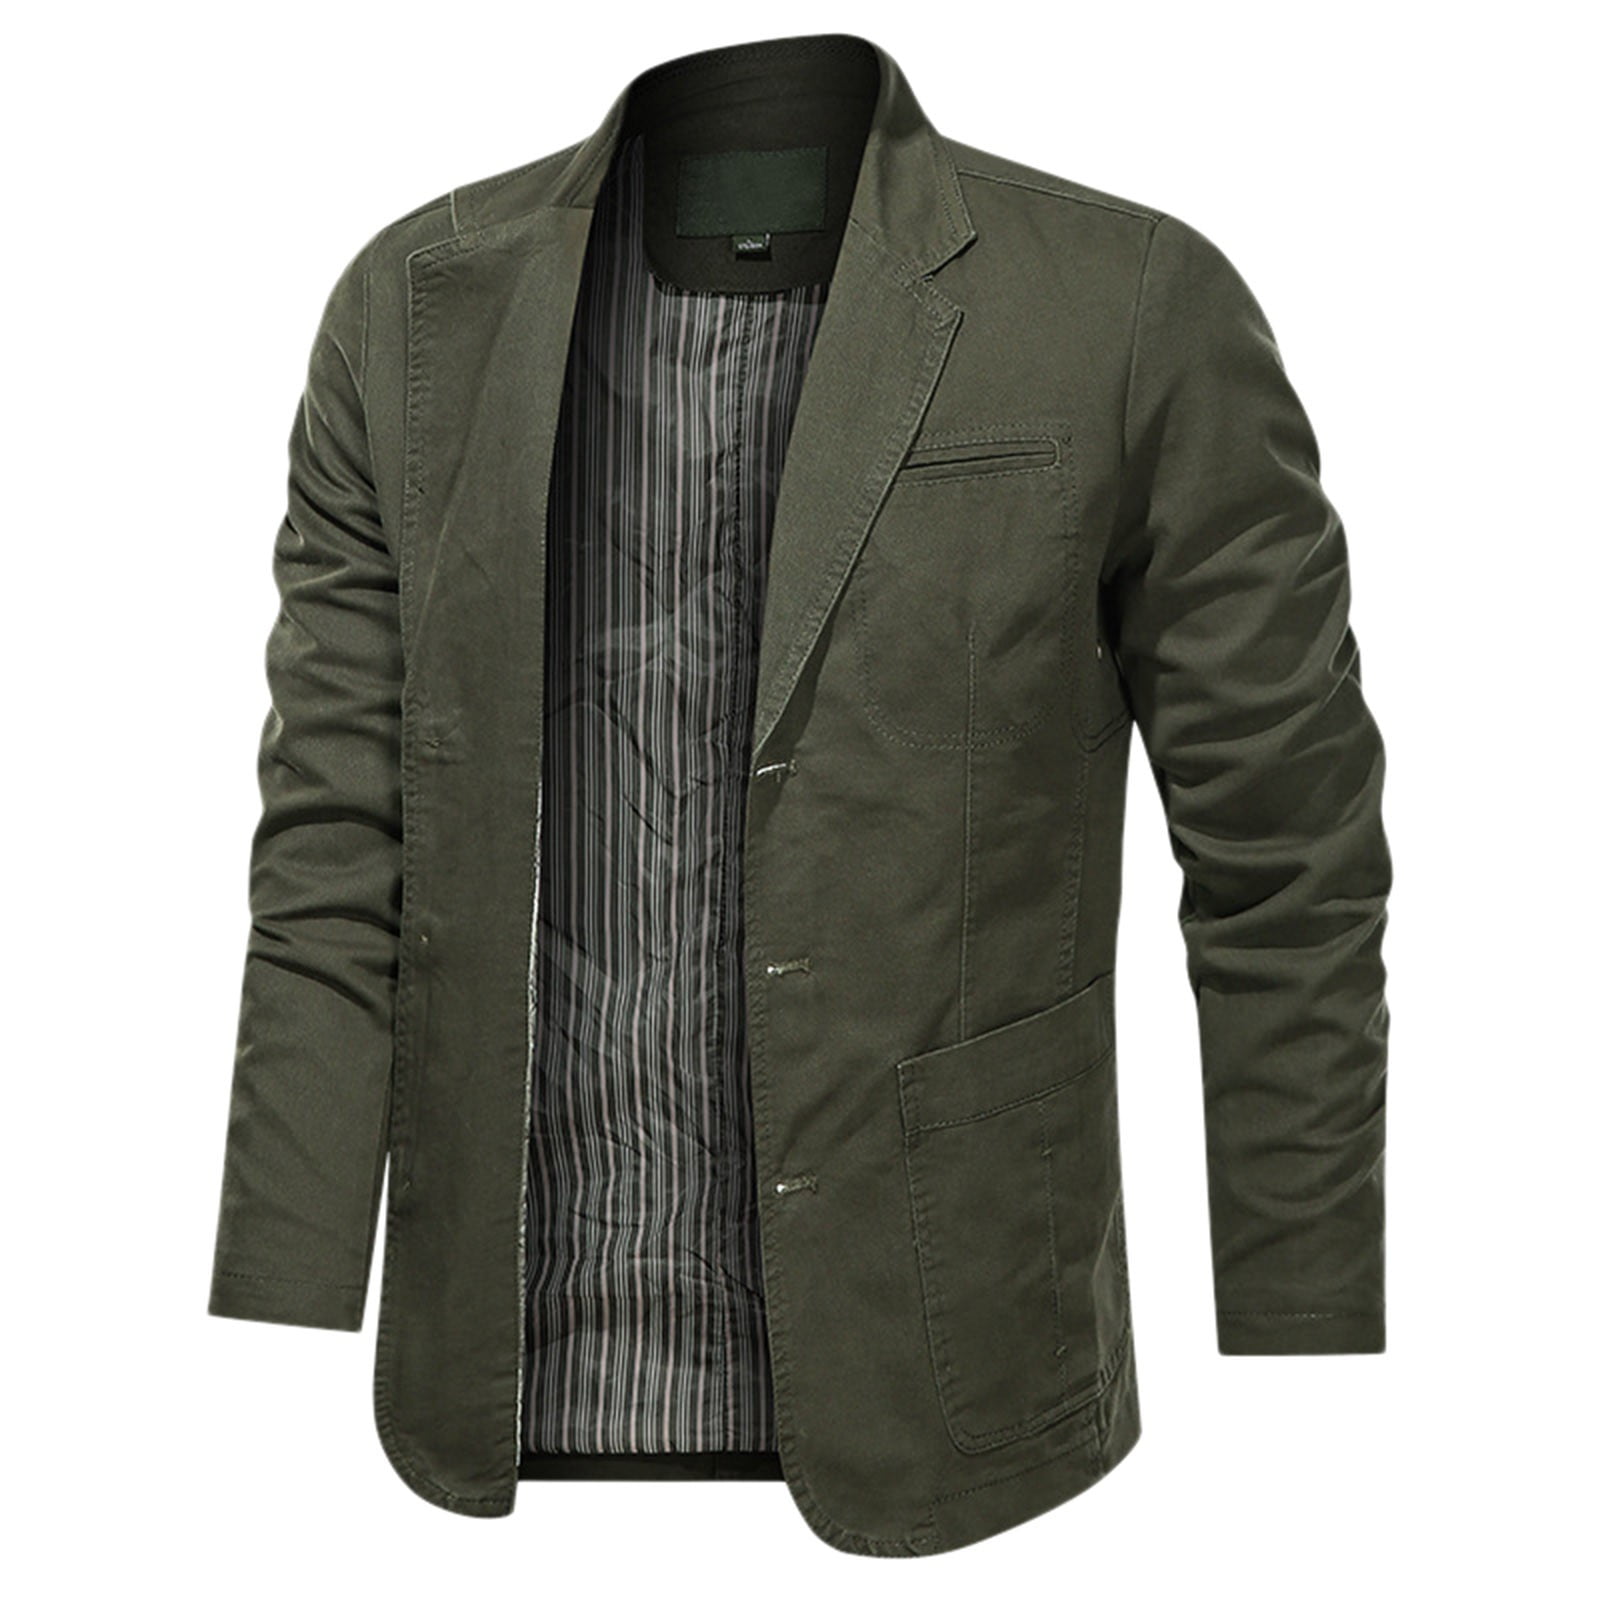 Baqcunre Jackets For Men Mens Fashion Simple Camouflage Pocket Cardigan Suit Botton Sweater Jacket Suits For Men Tops For Men Army Green 4XL dead3e1e fbc5 4aae ae88 f19fc9391a07.349fc9586115f76c08ed8f09285a5f98